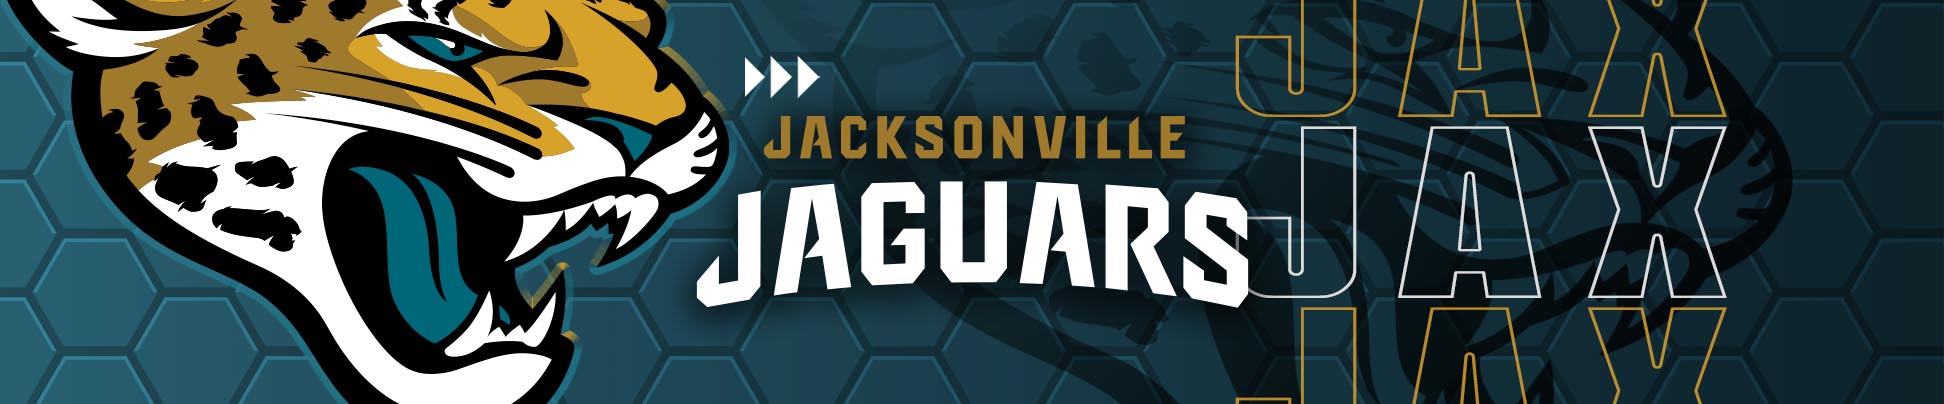 Jacksonville Jaguars Memorabilia & Collectibles